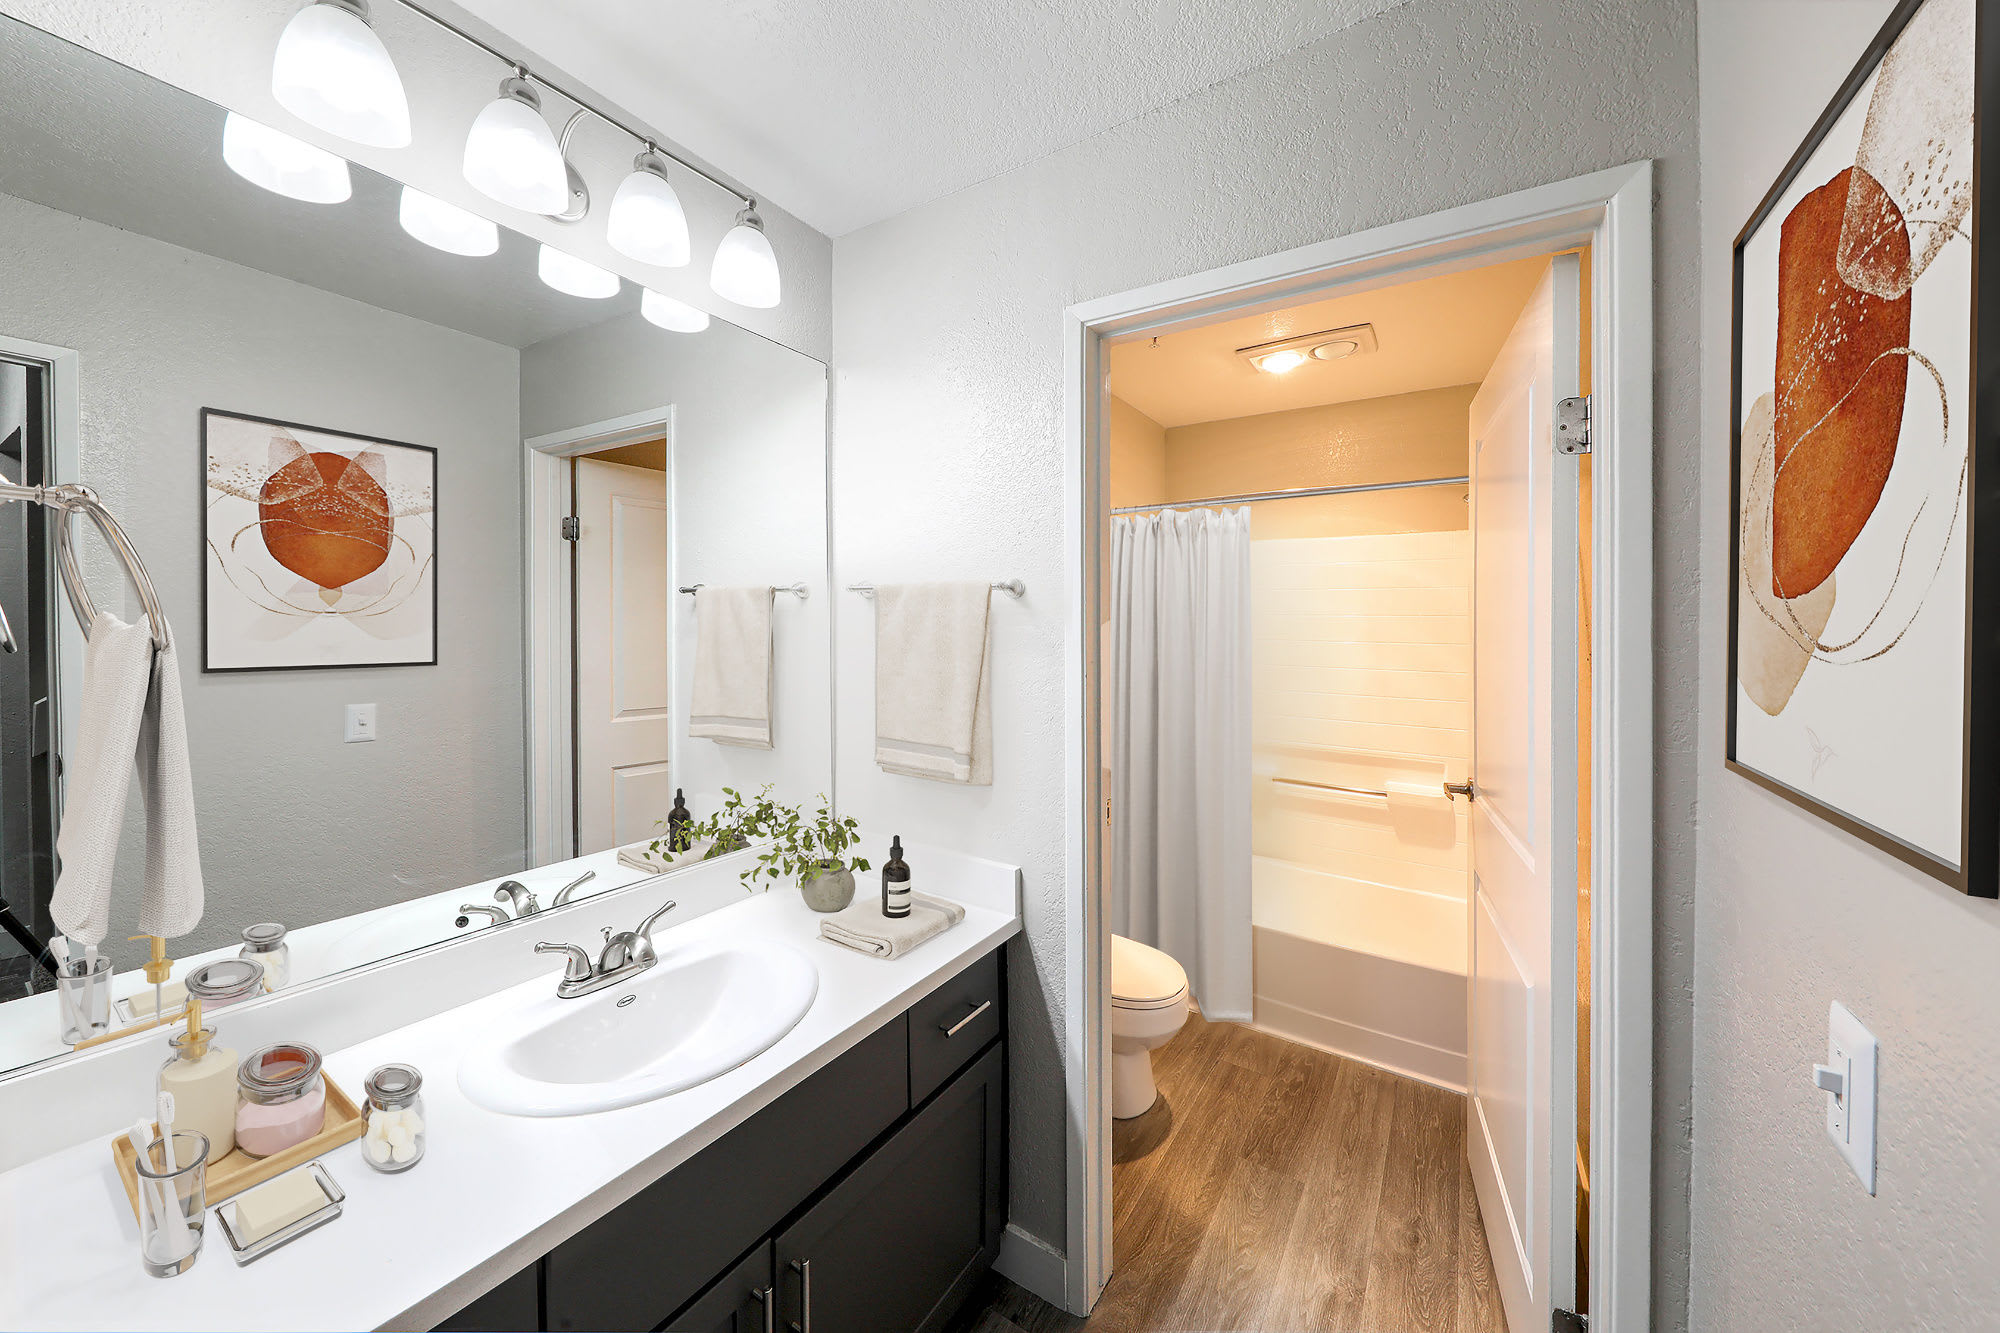 Modern finishes in an apartment bathroom at The Retreat in Santa Clarita, California